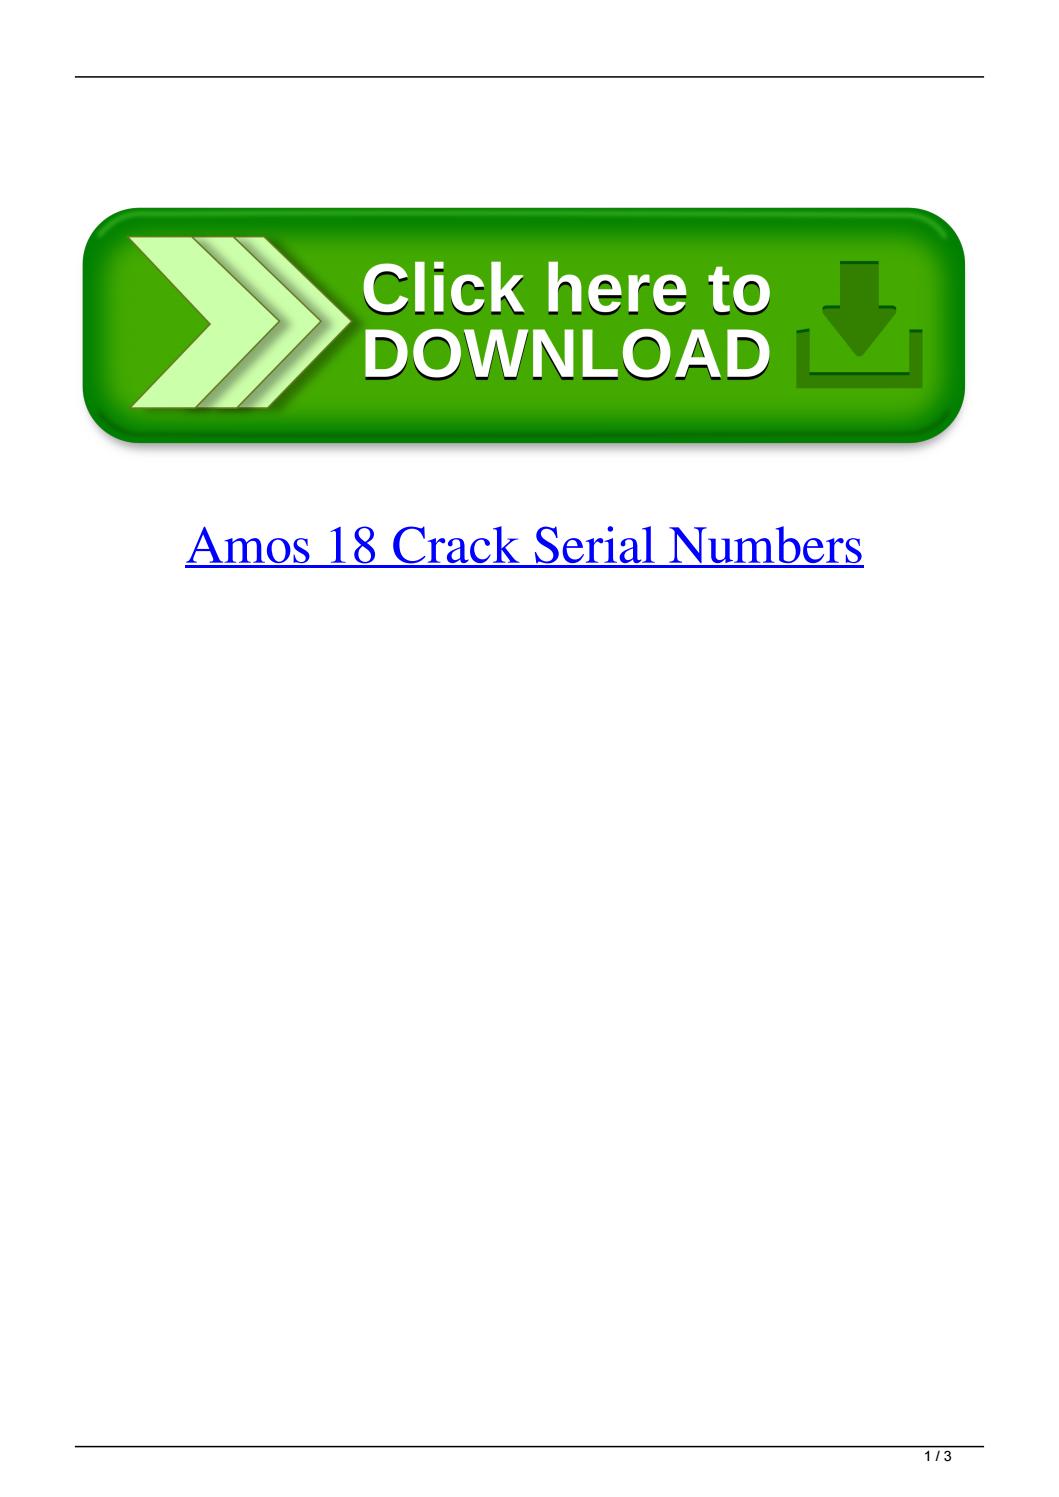 Amos 18 License Code Cracks